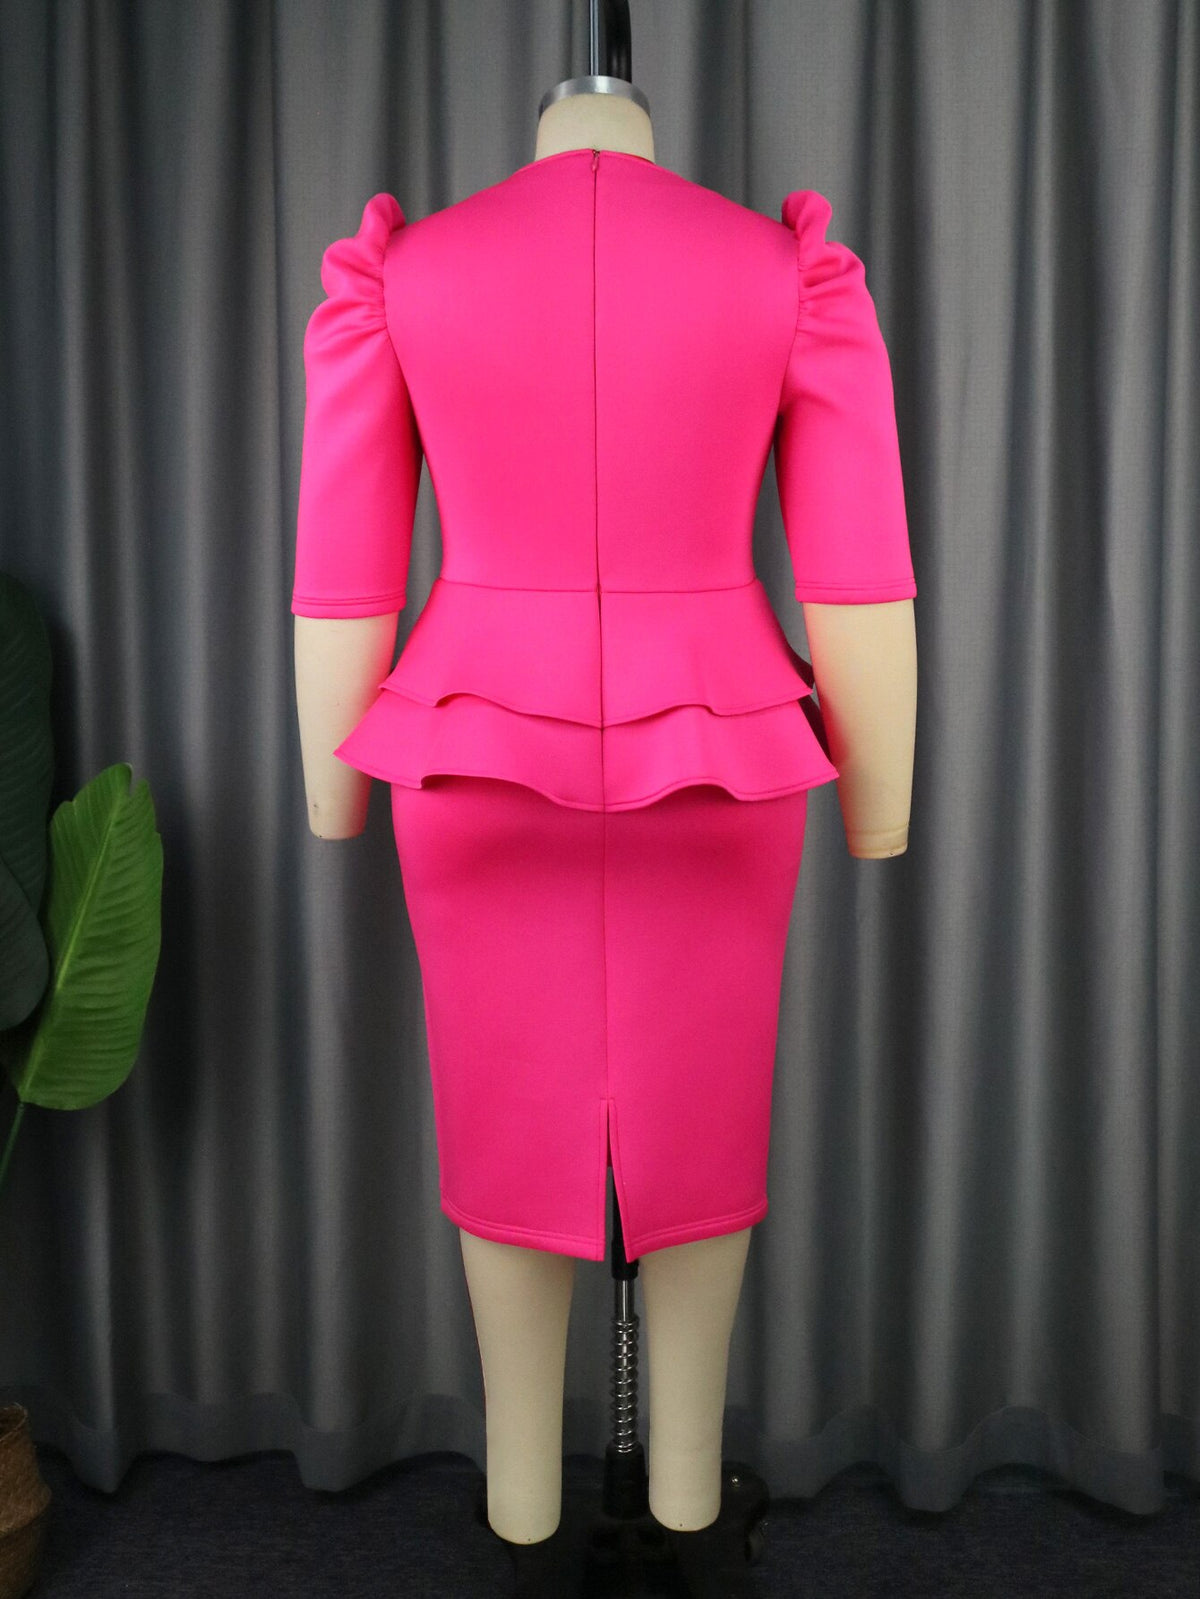 ONTINVA Fuchsia Dresses for Ladies V Neck Puff Half Sleeve Empire Peplum Ruffles Midi Office Work Evening Party Outfits 3XL 4XL